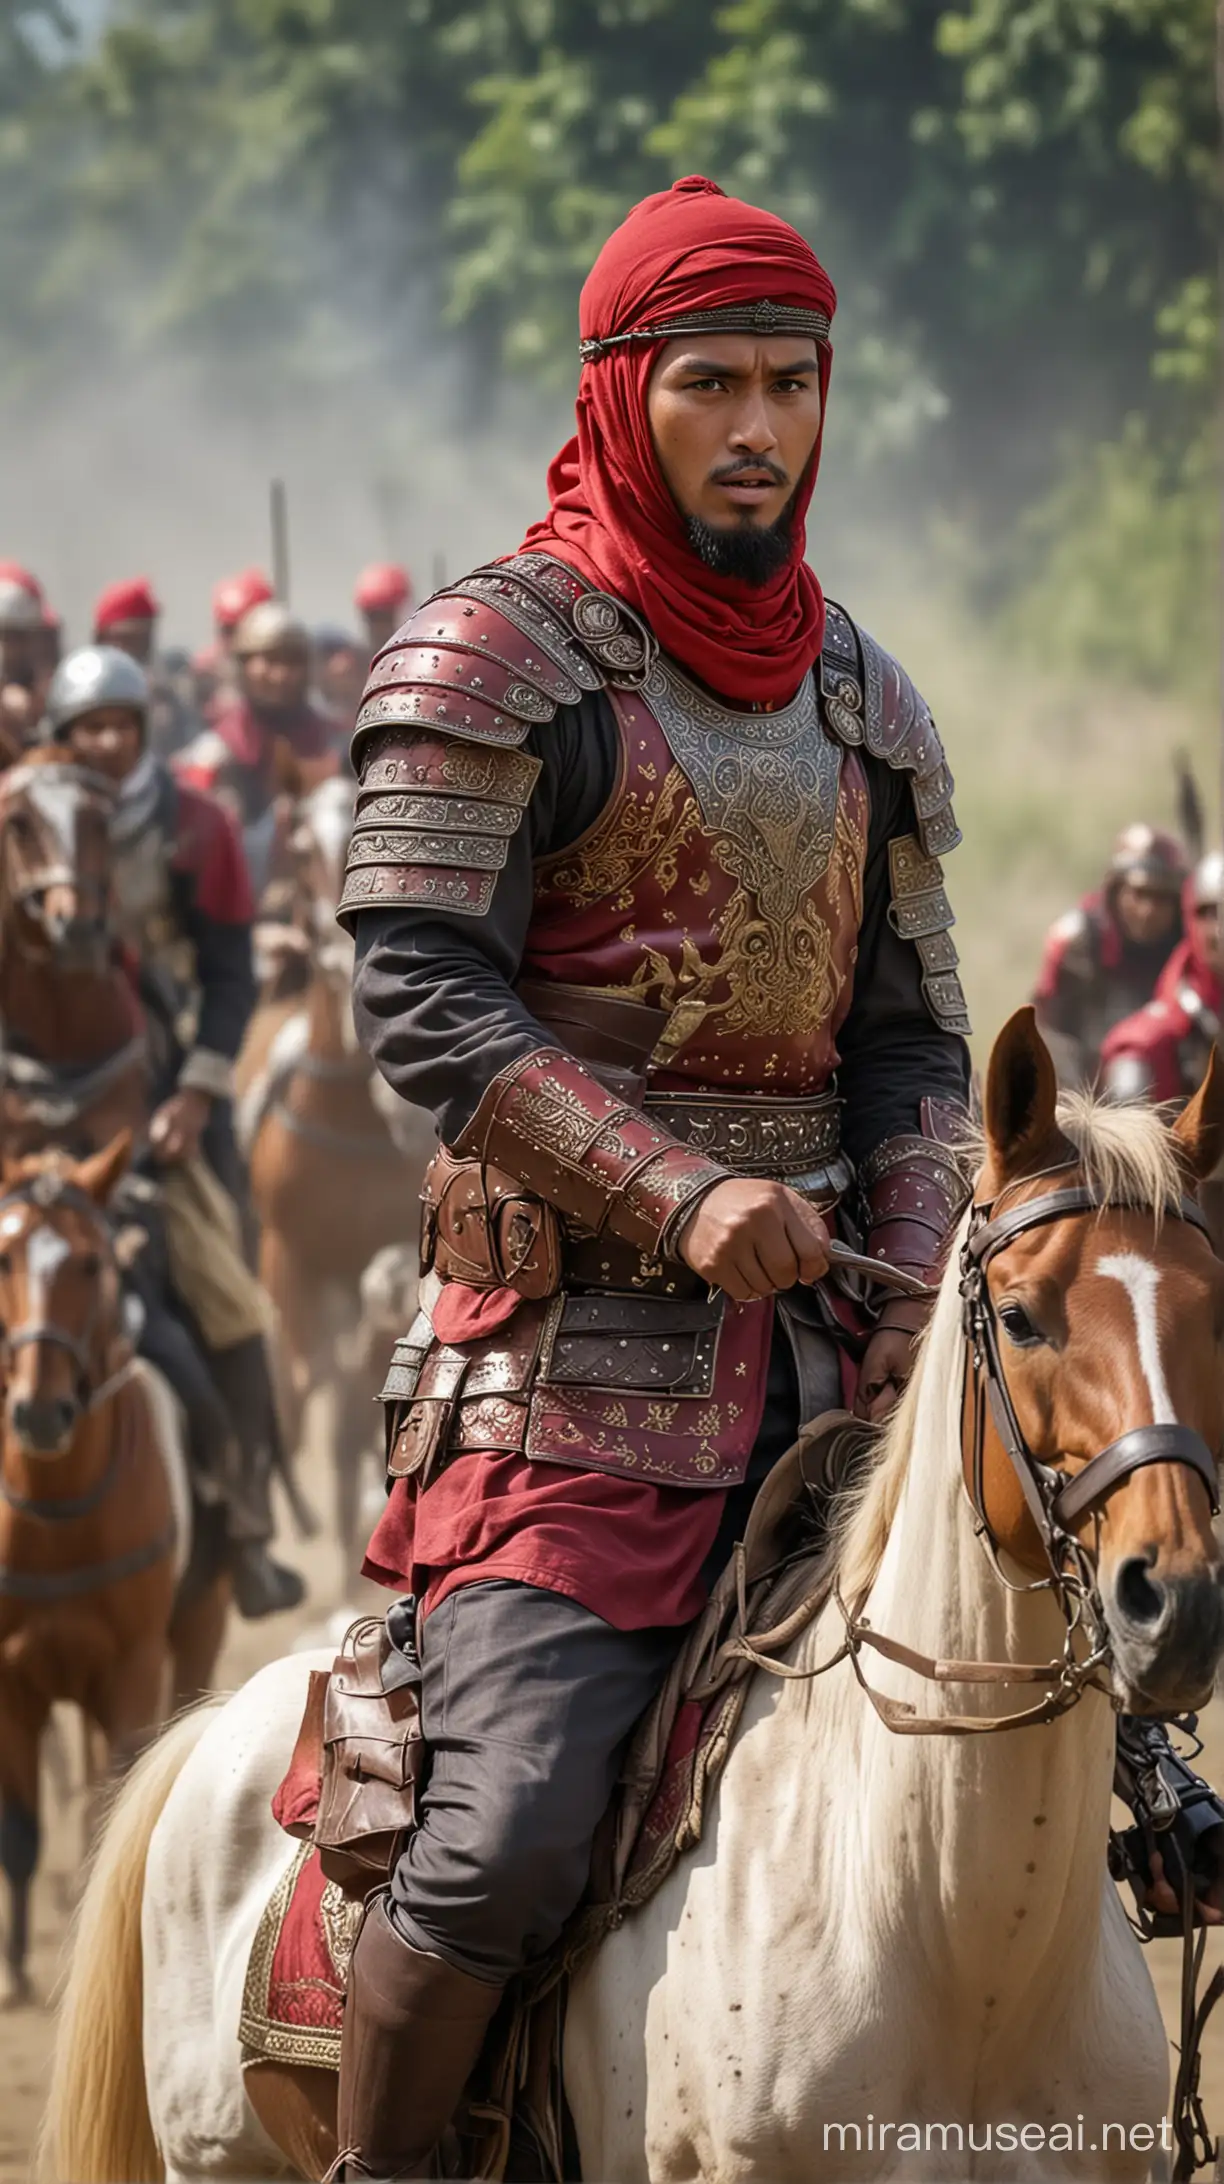 Muslim a man 27 years old,sedikit gemuk,tubuh pendek,wajah indonesia, wearing red helmets and armor, are riding horses into battle